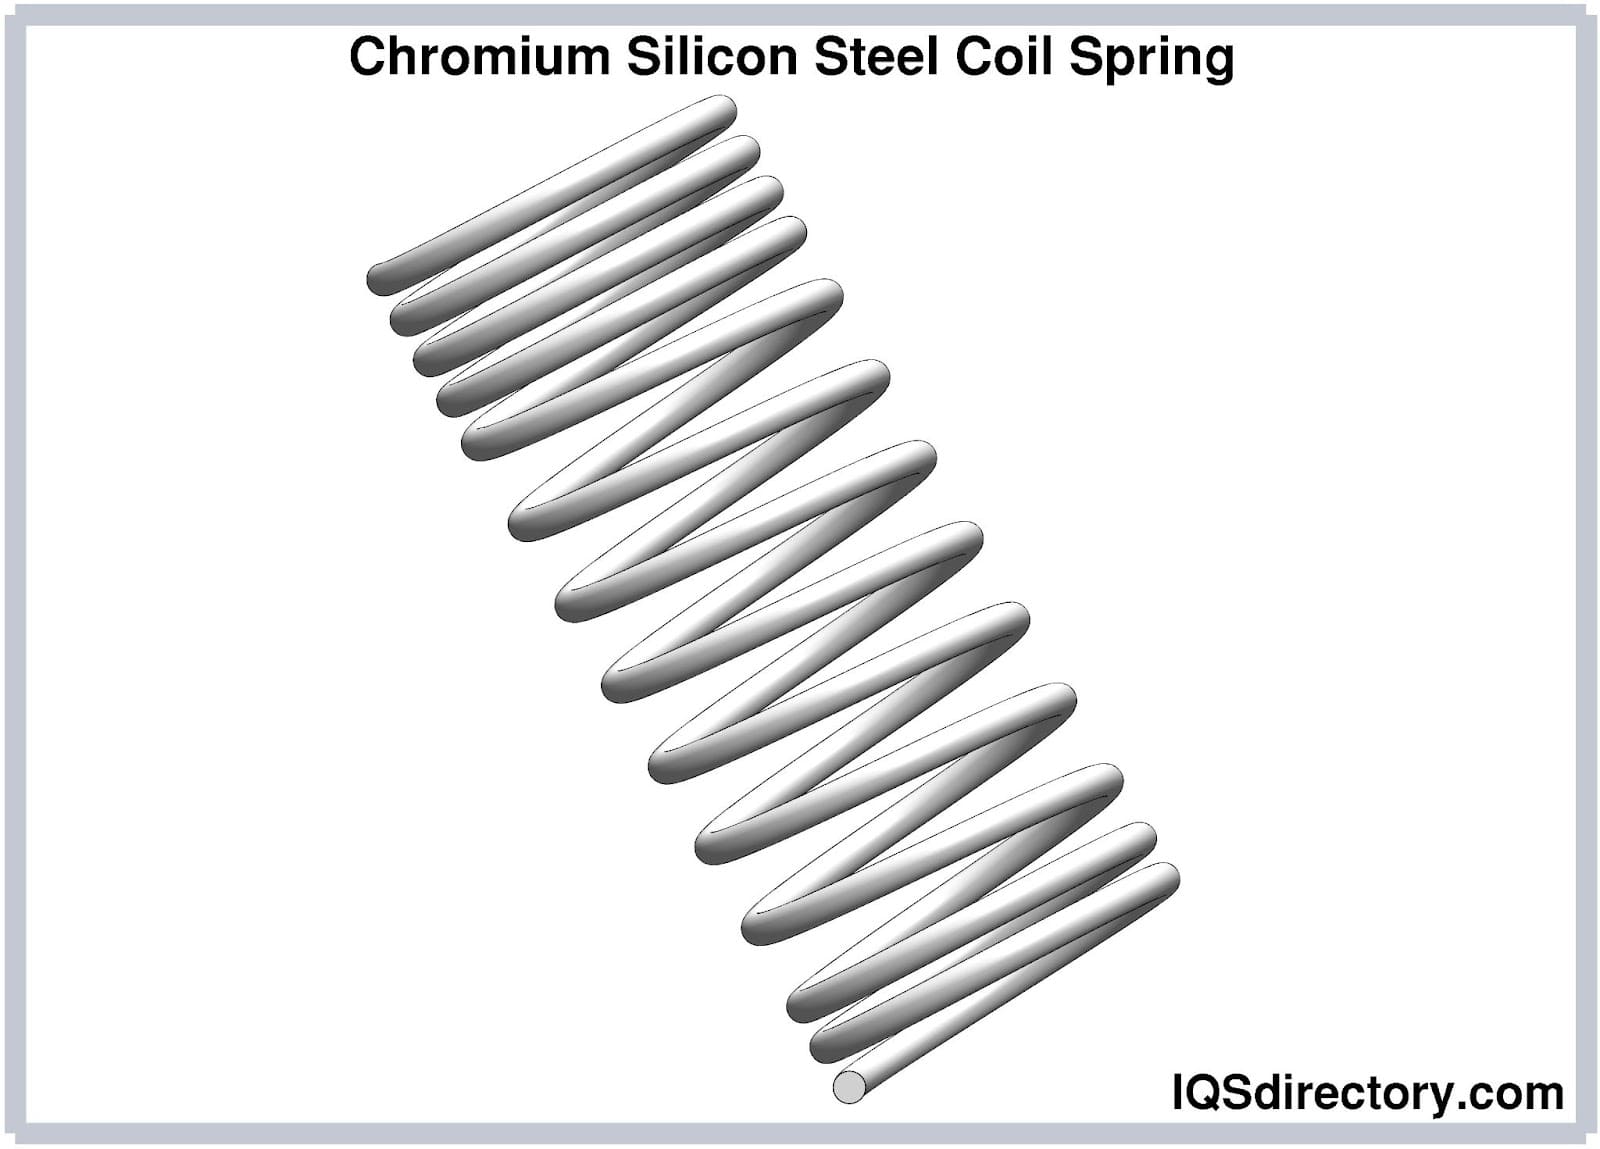 Chromium Silicon Steel Coil Spring